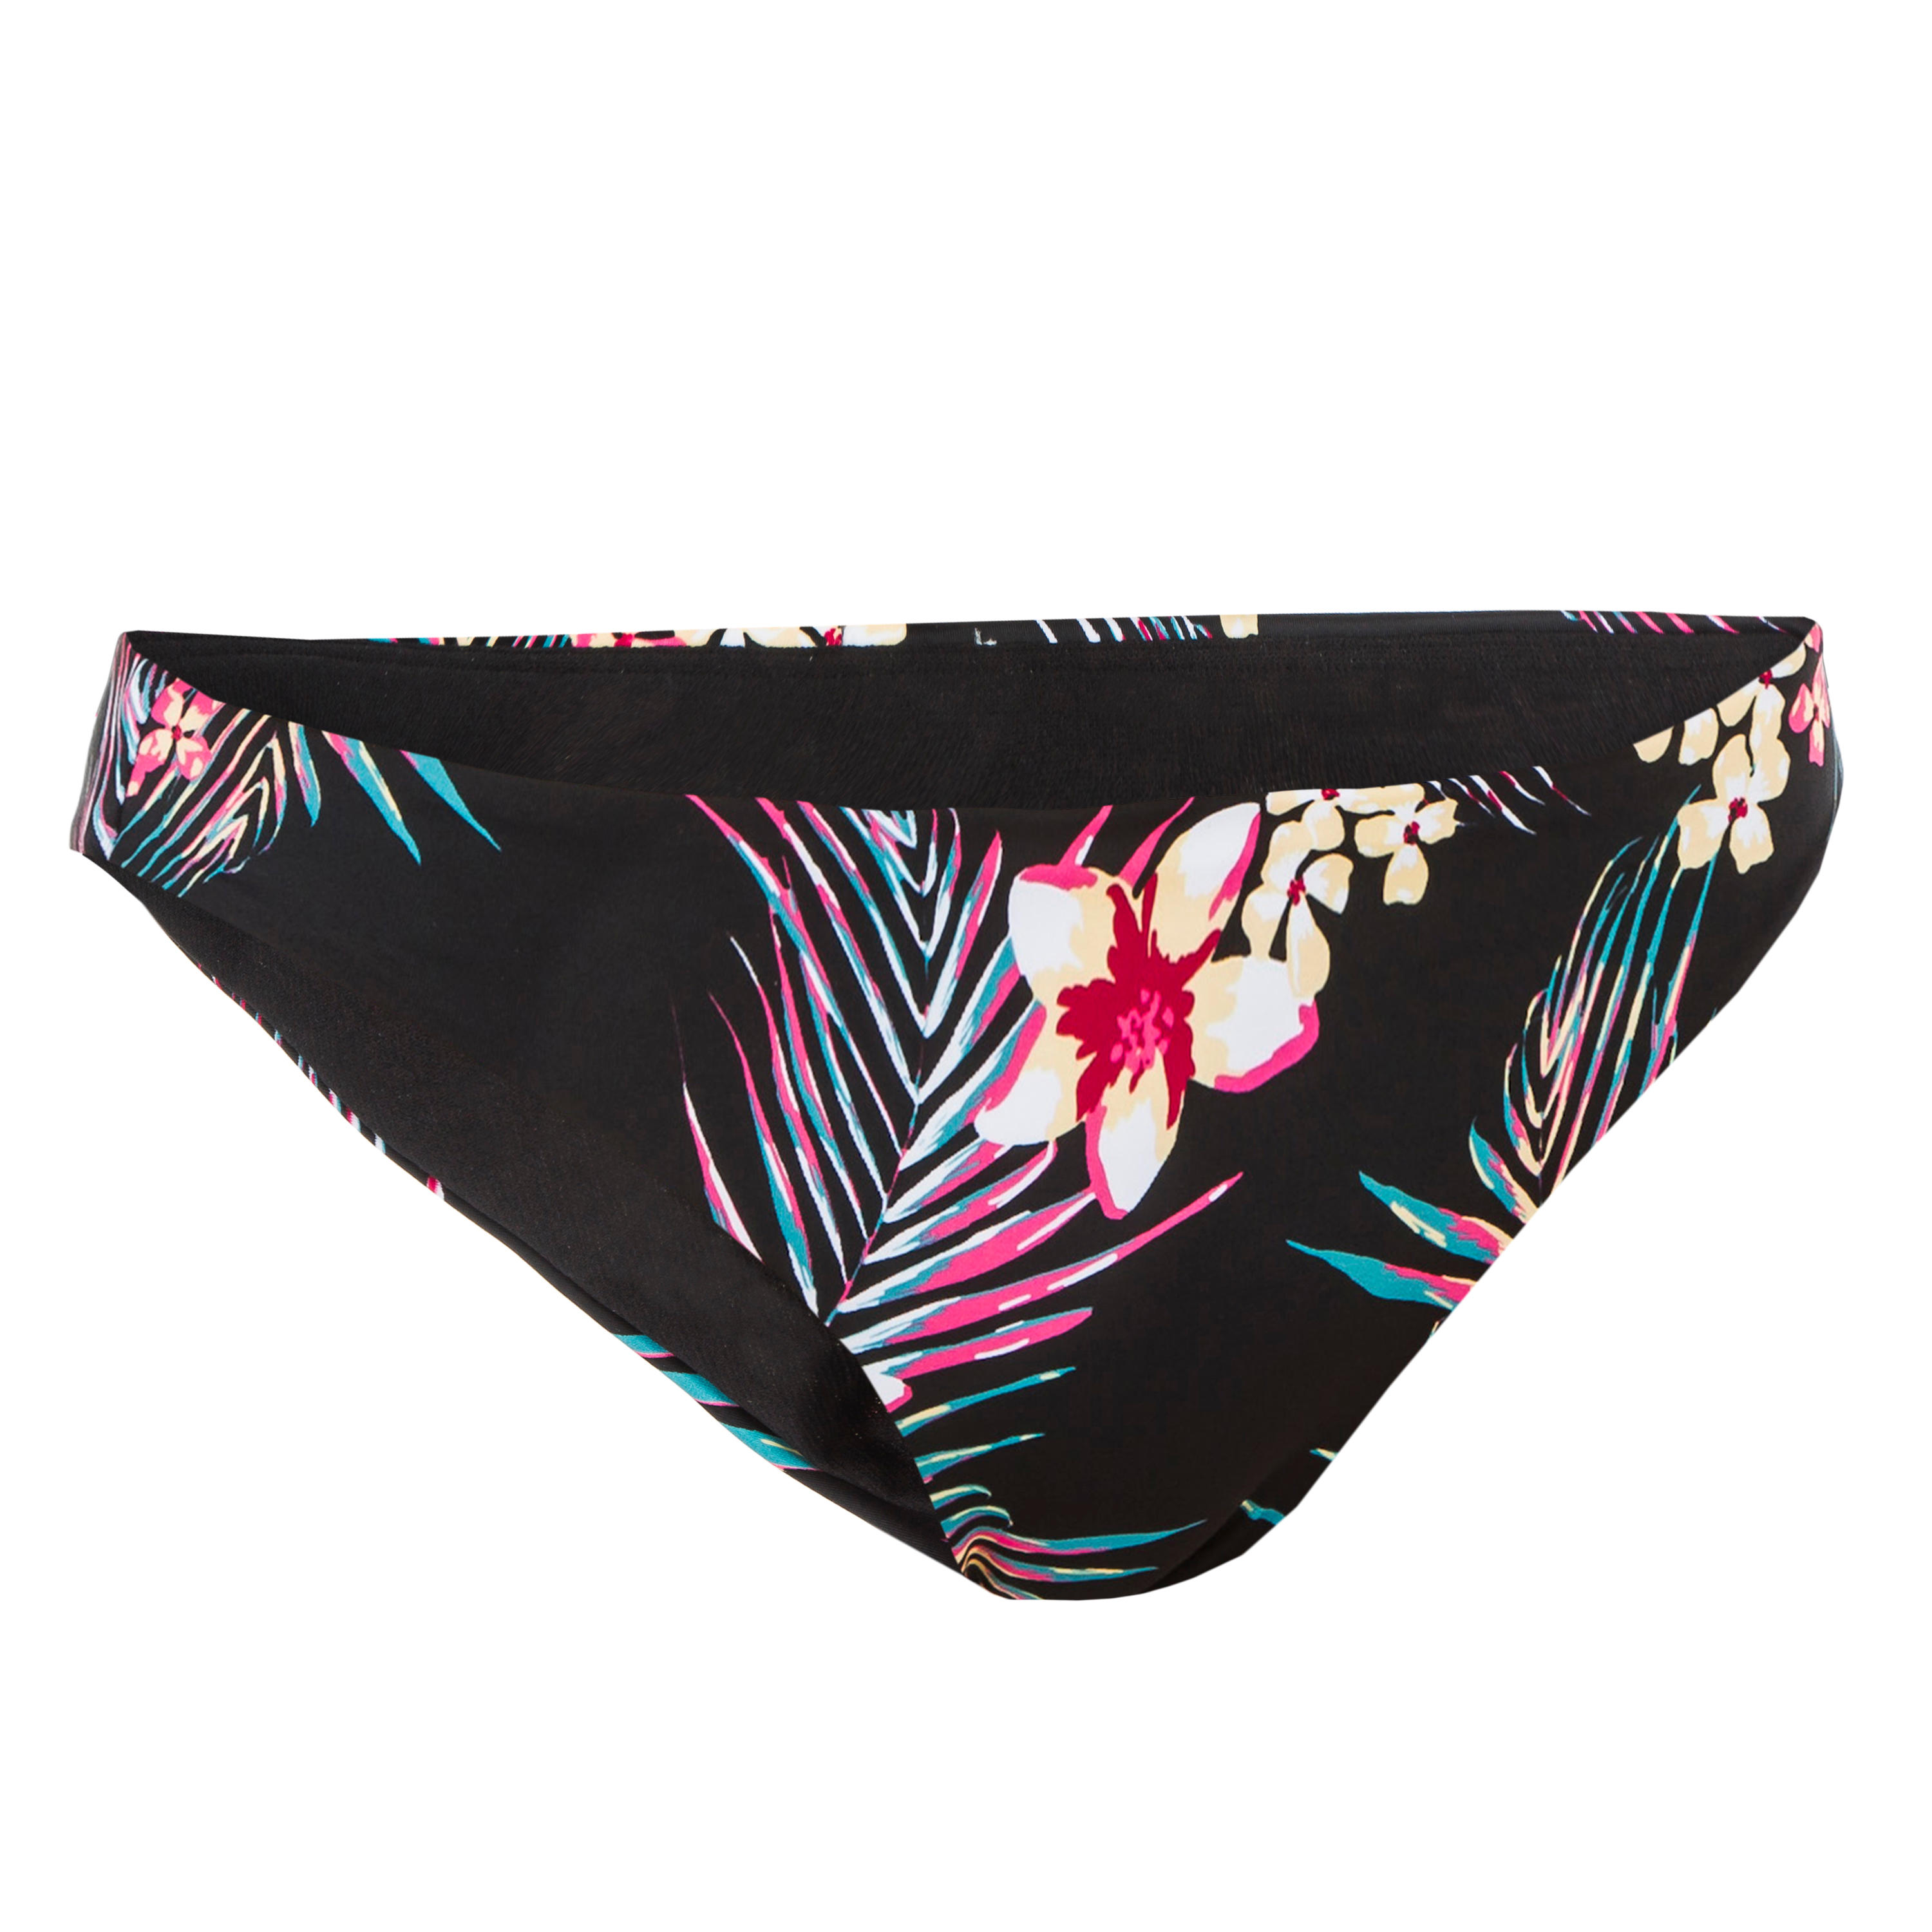 Roxy Women’s swimsuit briefs - Floral 2/8